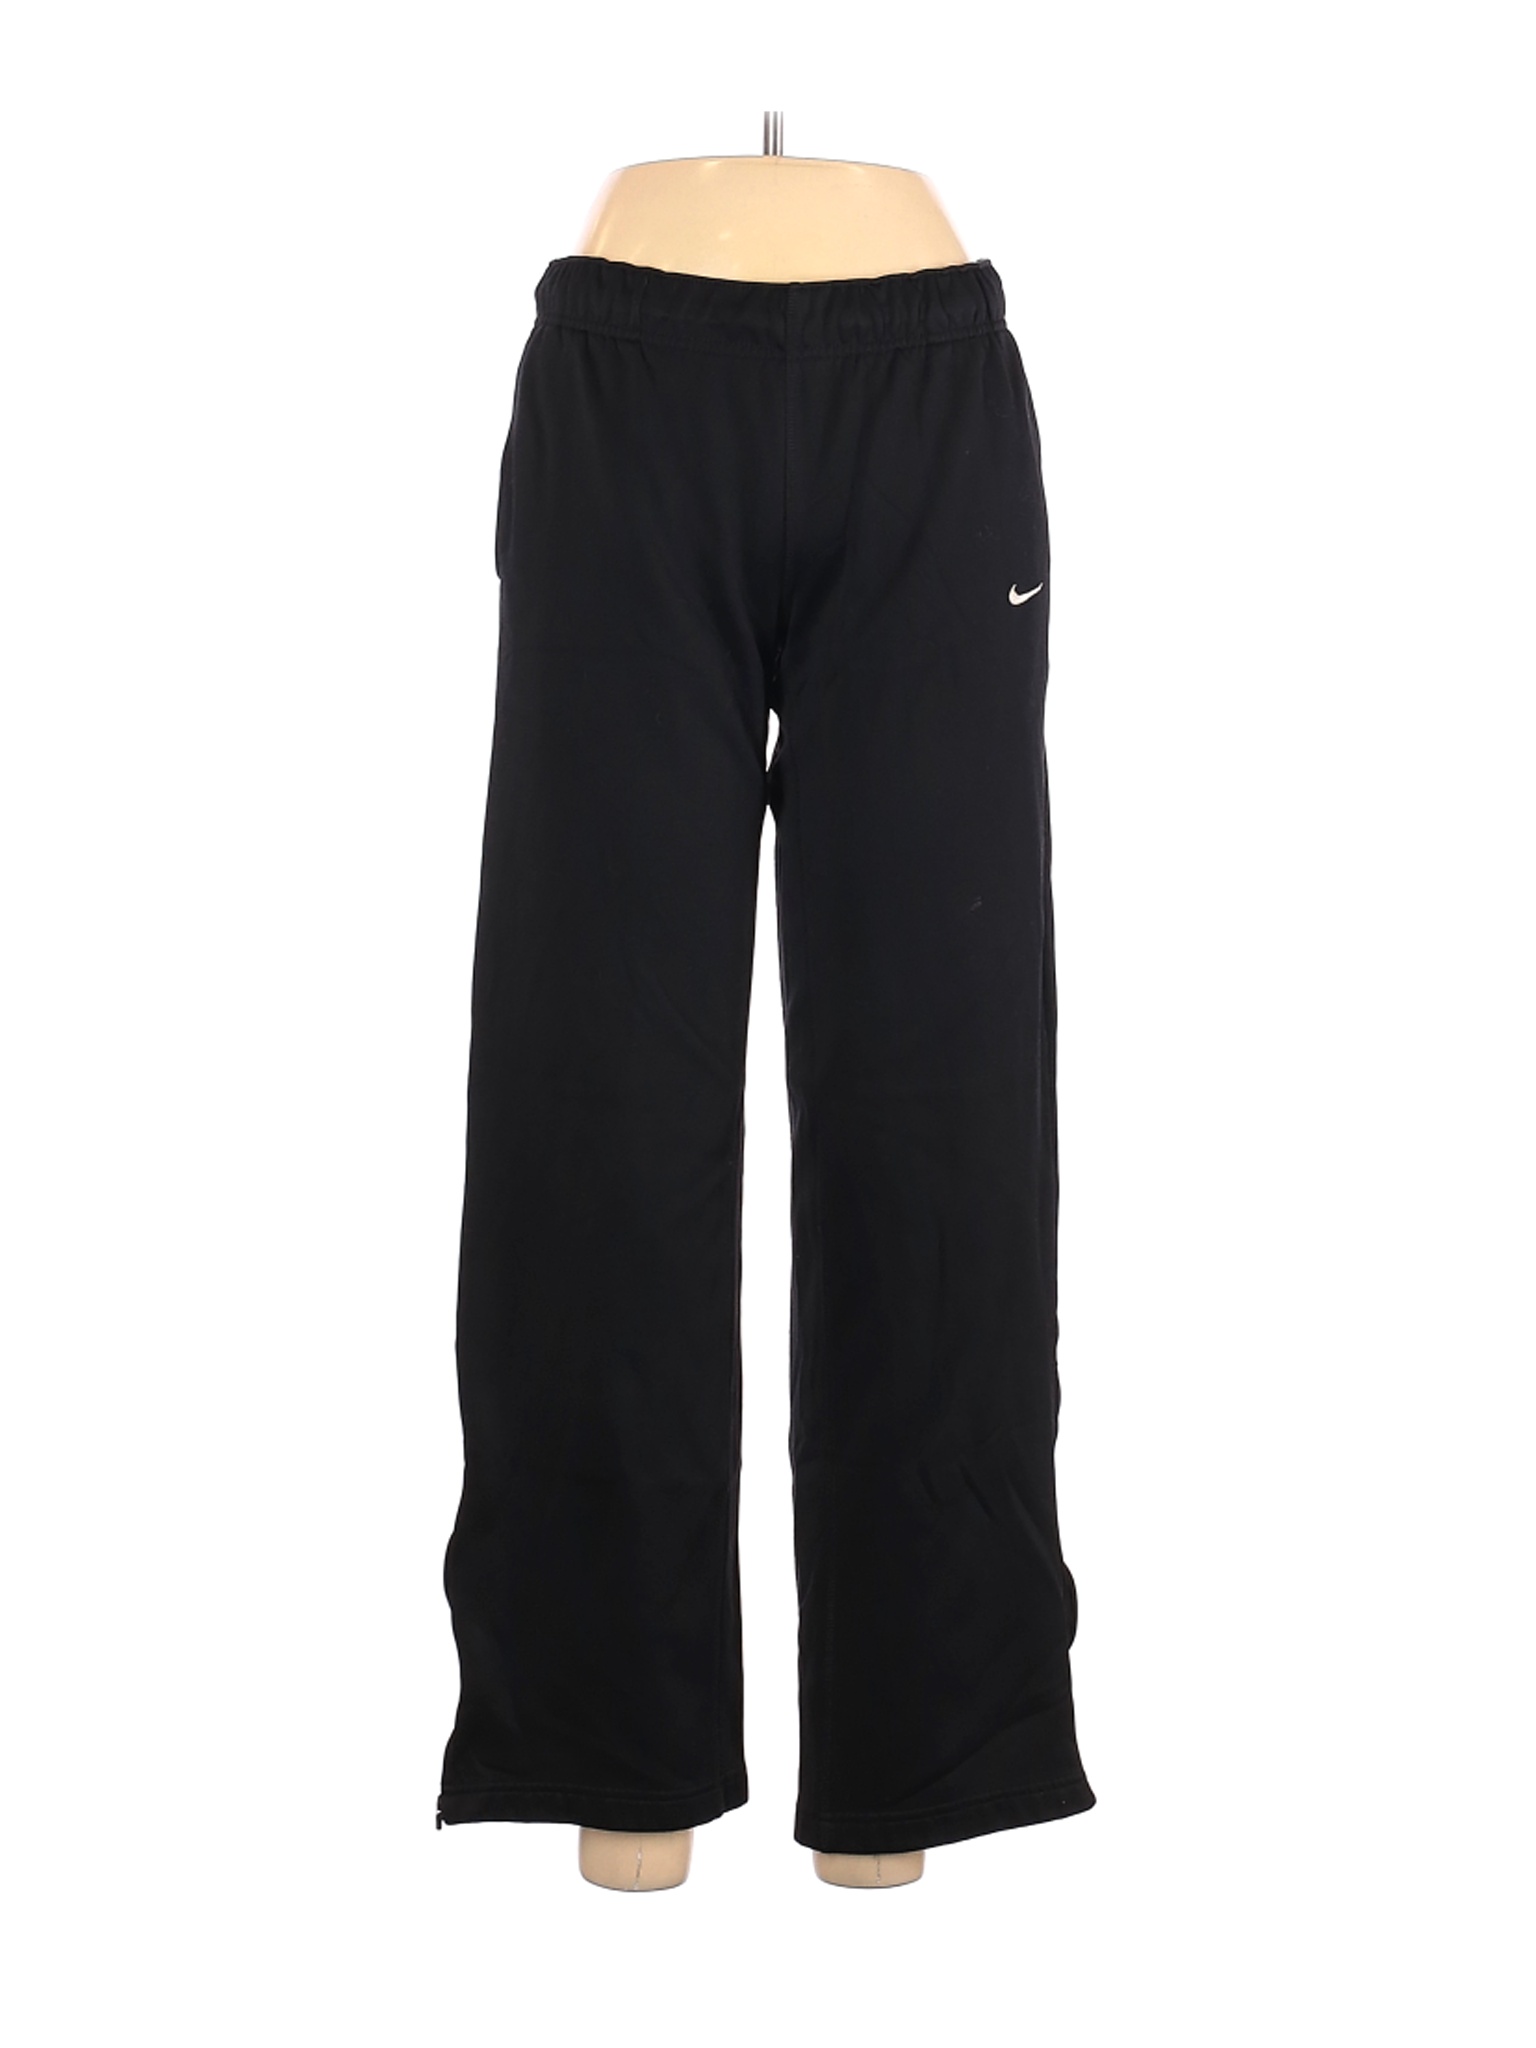 Nike Women Black Active Pants M | eBay